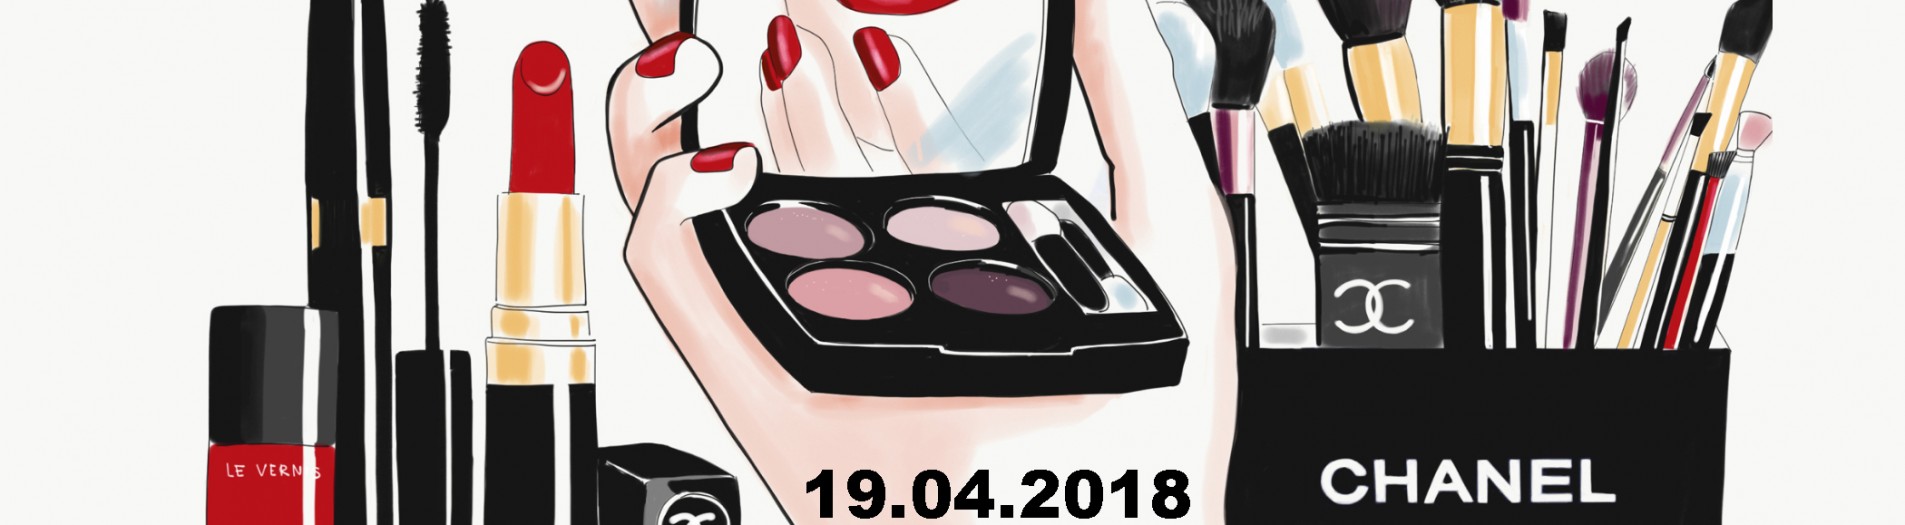 Chanel Make-up Masterclass/ Event Invitation